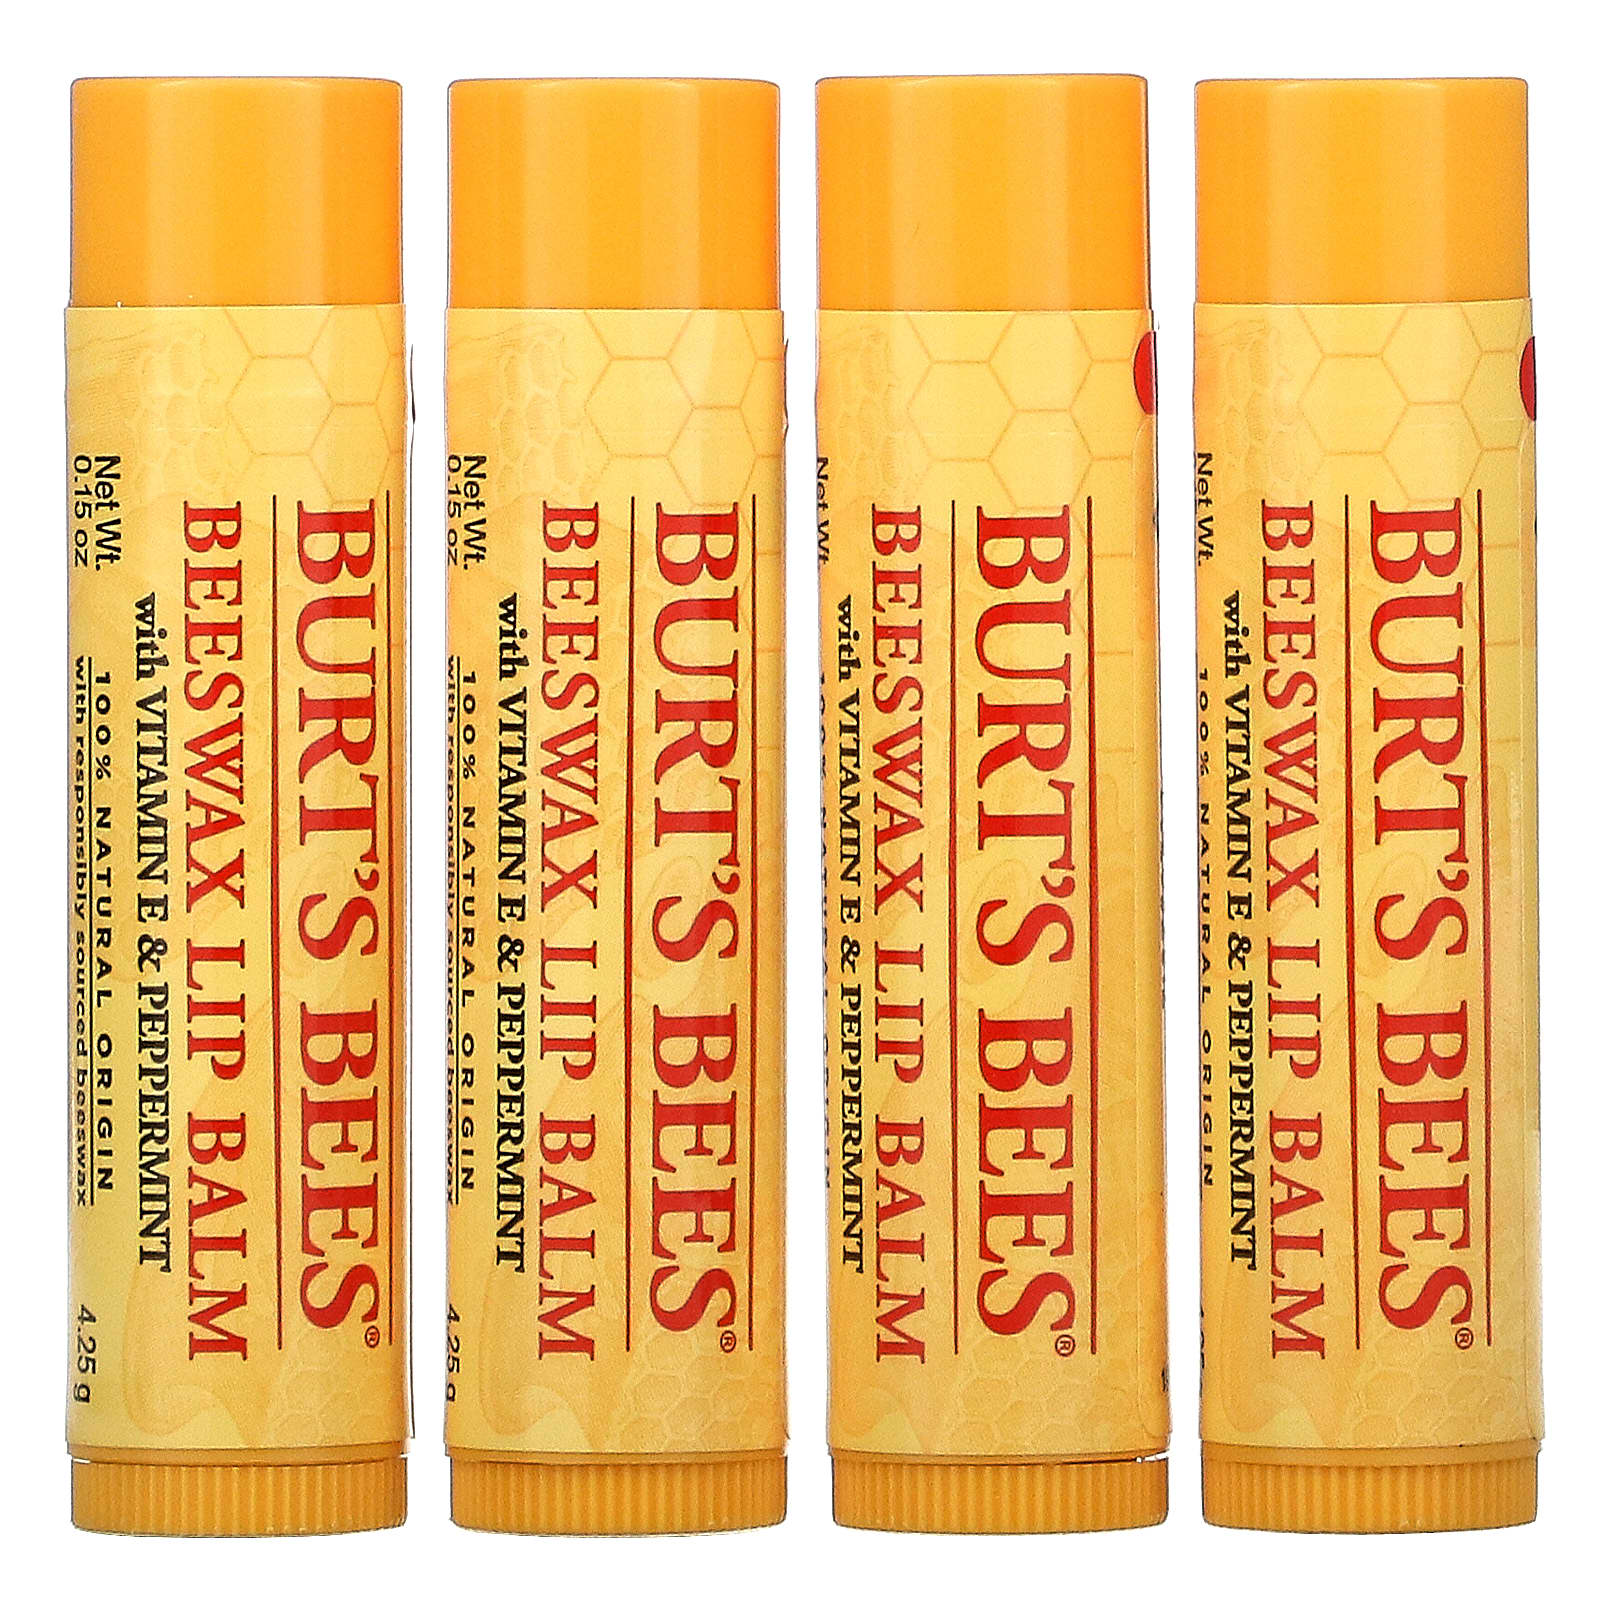 Burt's Bees Beeswax Lip Balm 0.15 oz.